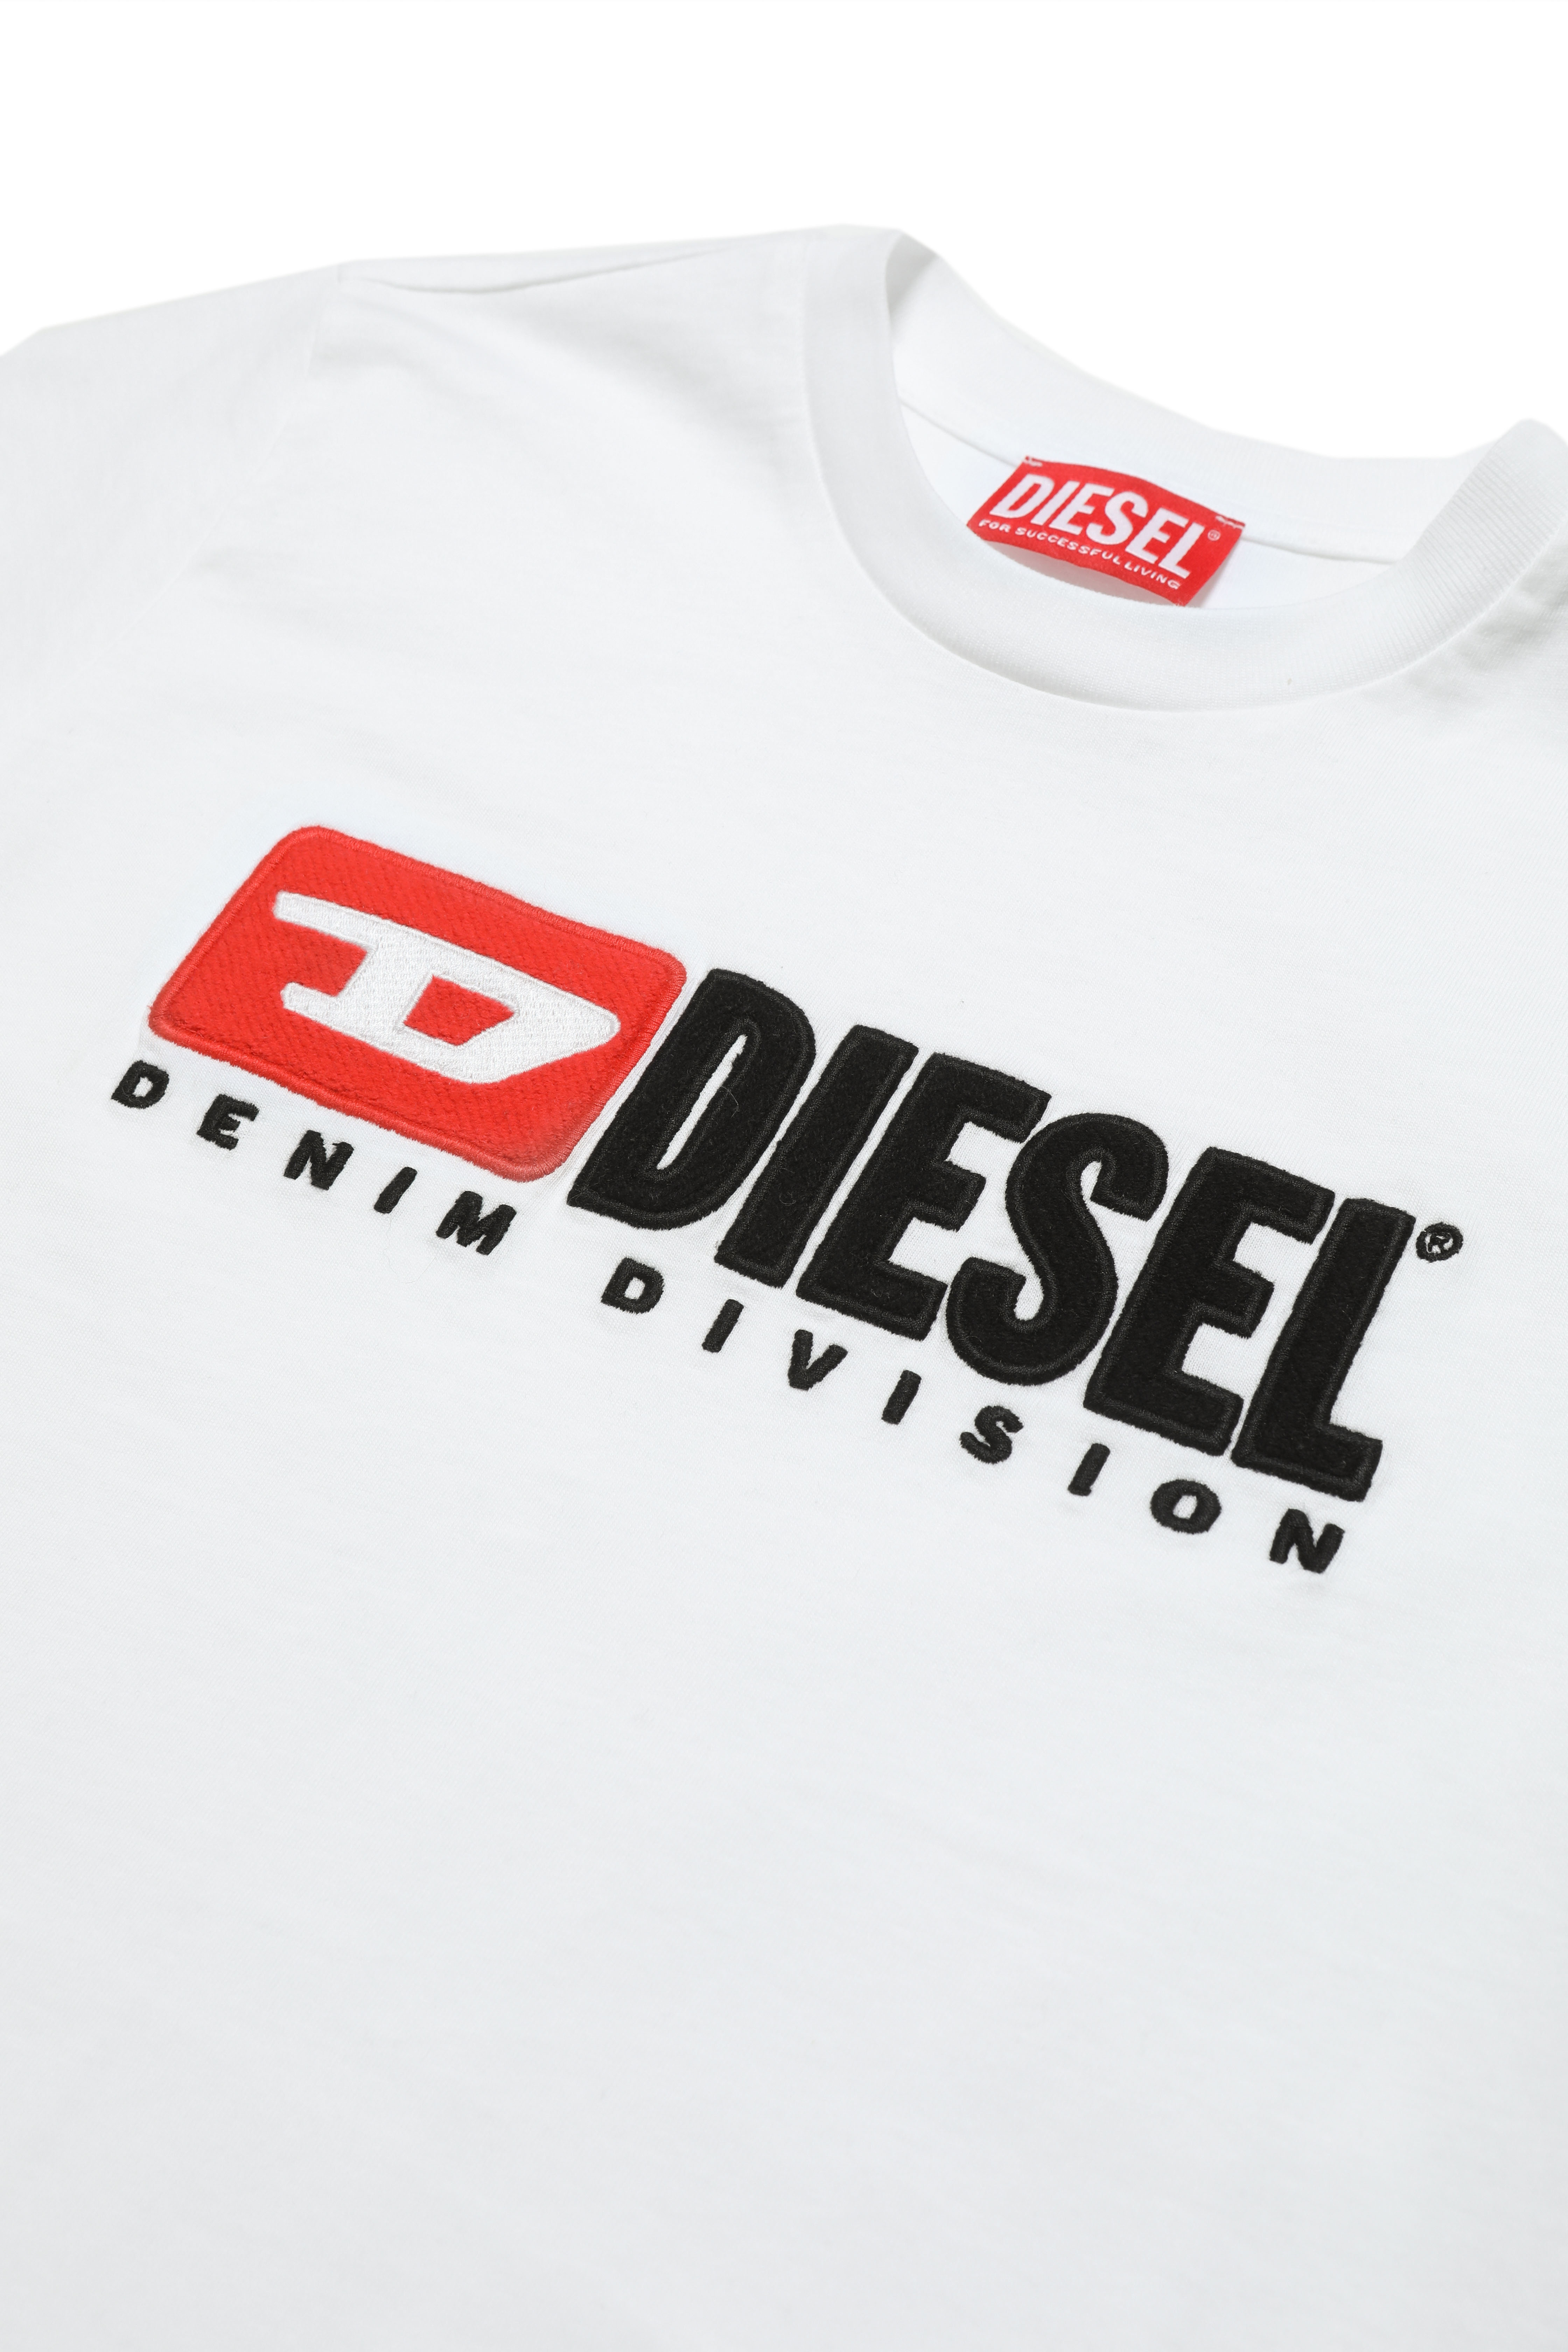 Diesel - TDIEGODIVE, White - Image 3